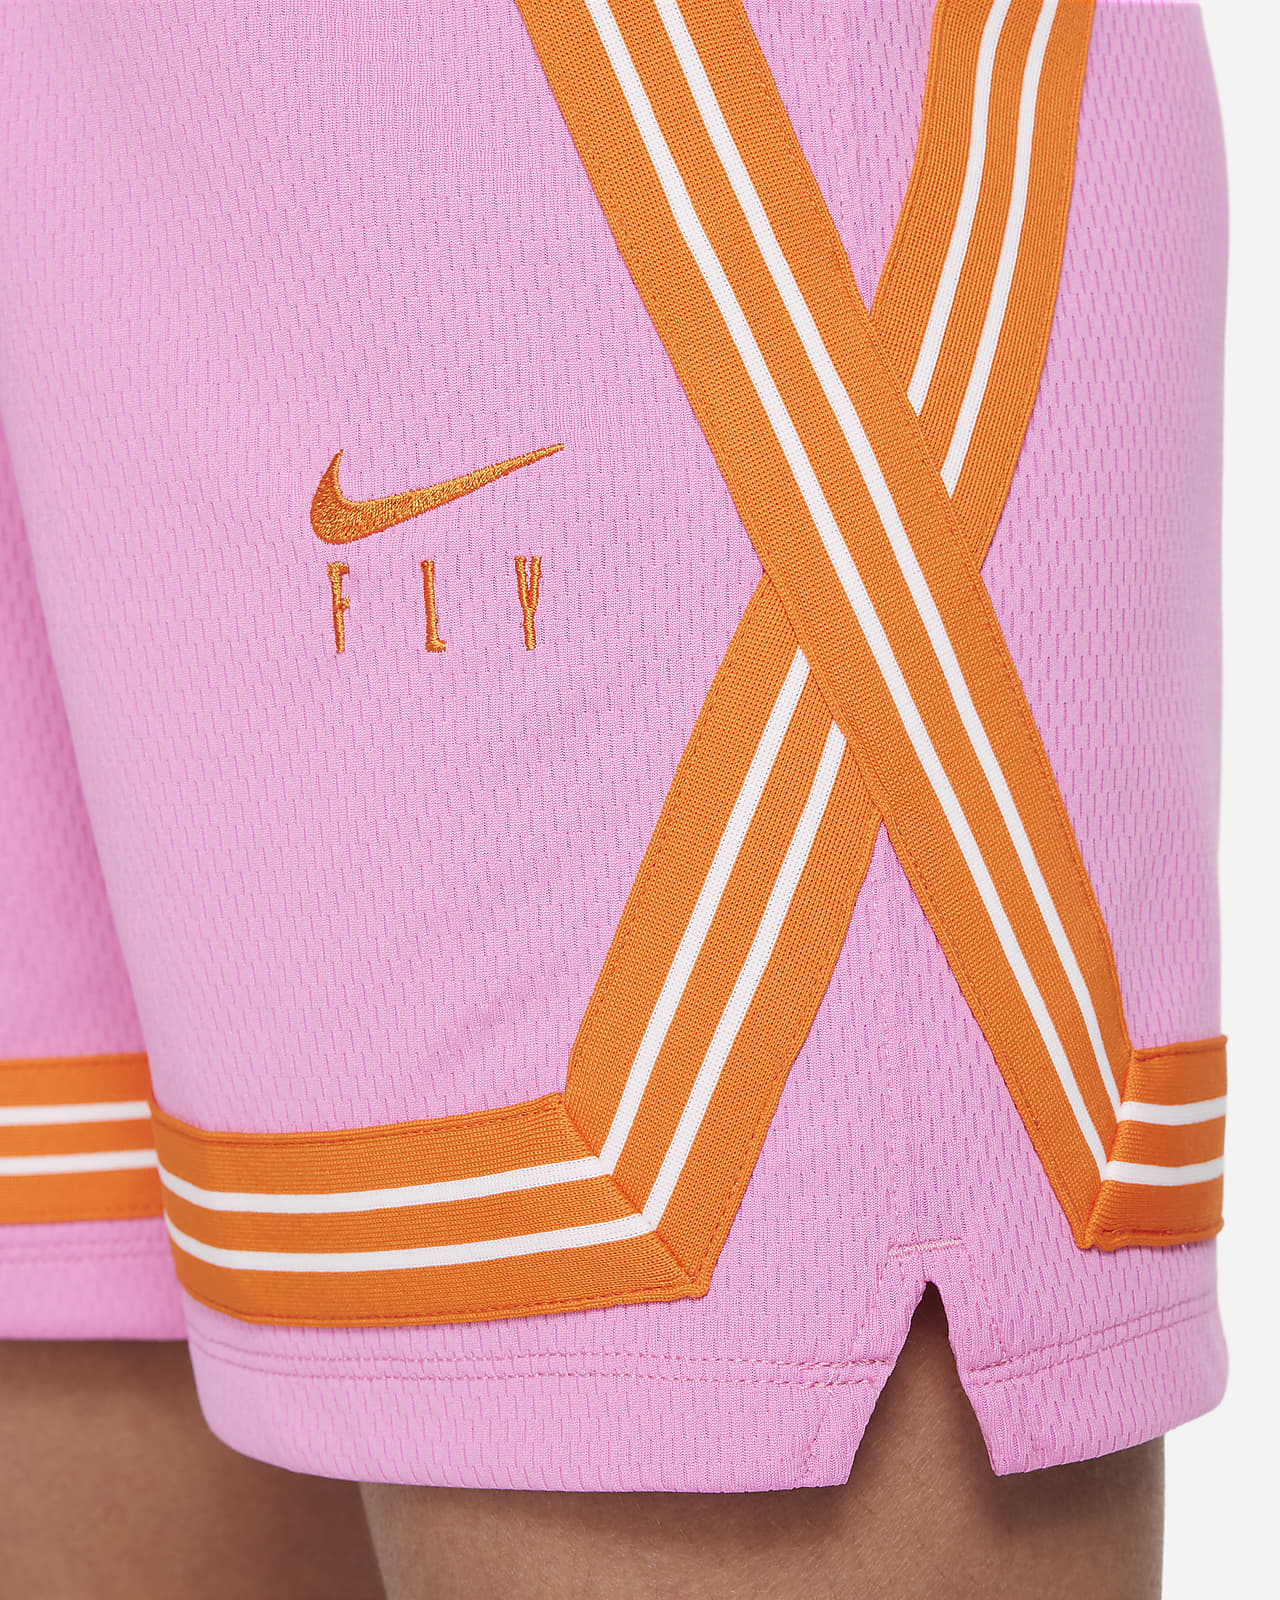 Nike, Shorts, Nike Fly Drifit Womens Pink Basketball Shorts Size S